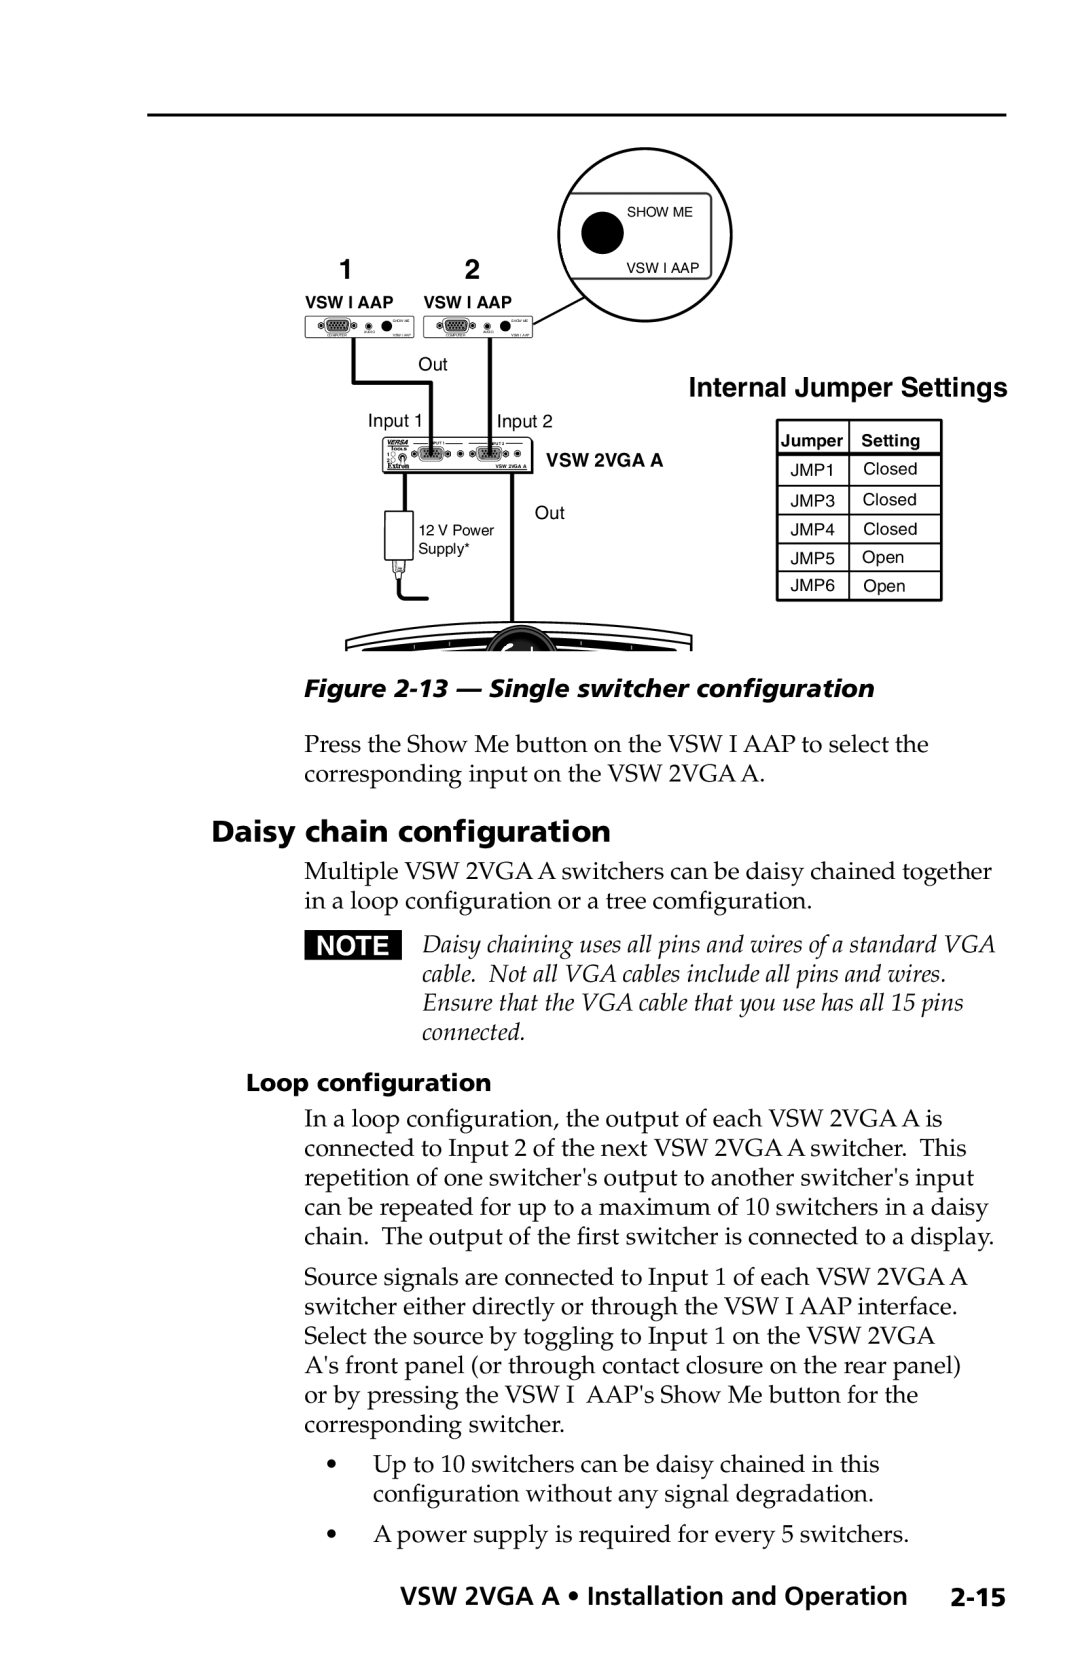 Extron electronic VSW 2VGA A Daisy chain configuration, Internal Jumper Settings, 13 - Single switcher configuration 